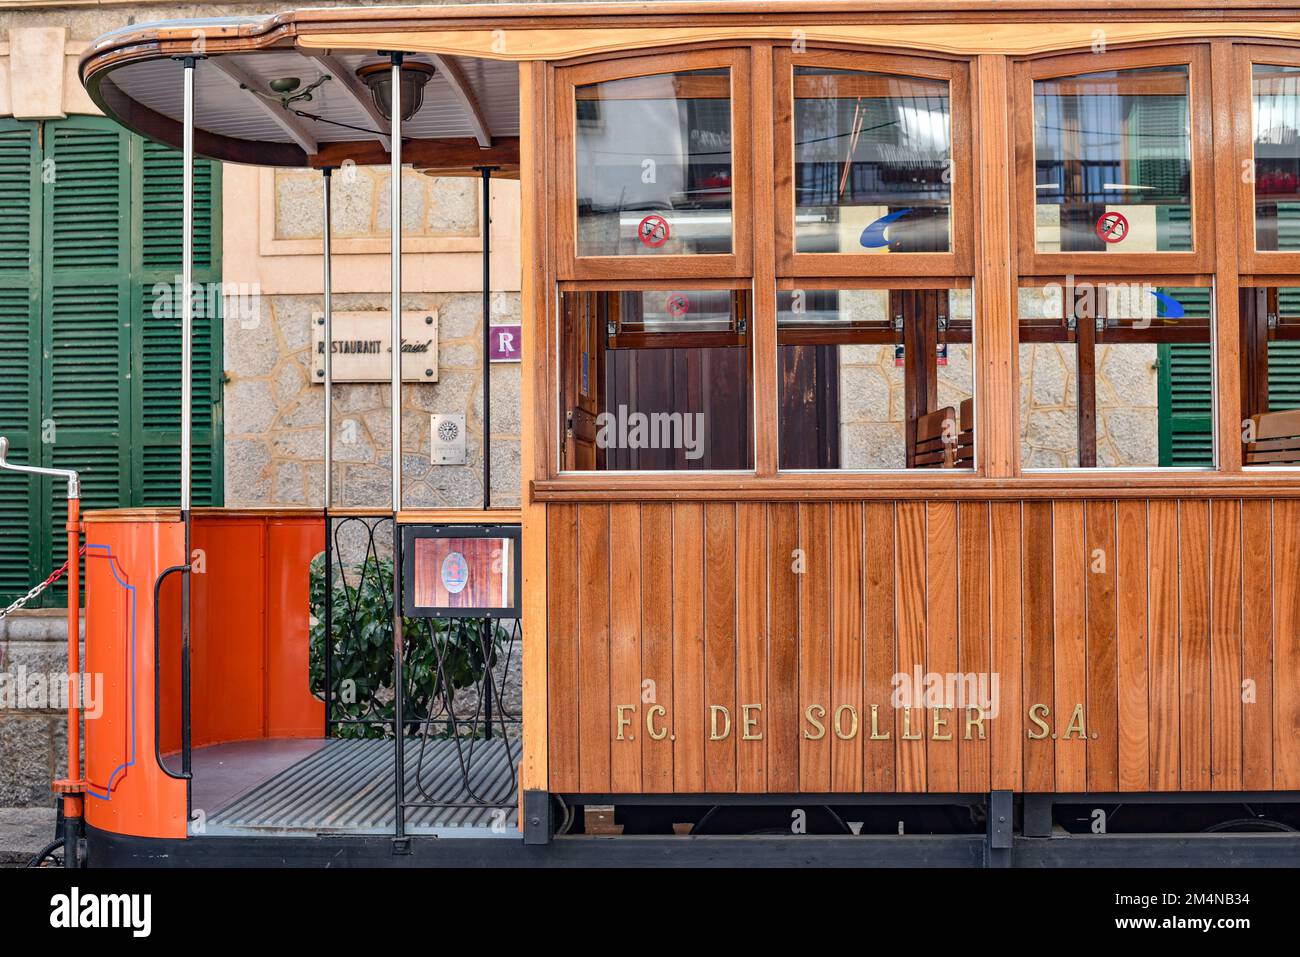 Port de Soller, Mallorca, Spain - 11 Nov 2022: Ferrocarril Tram train in the tourist town of Soller Stock Photo